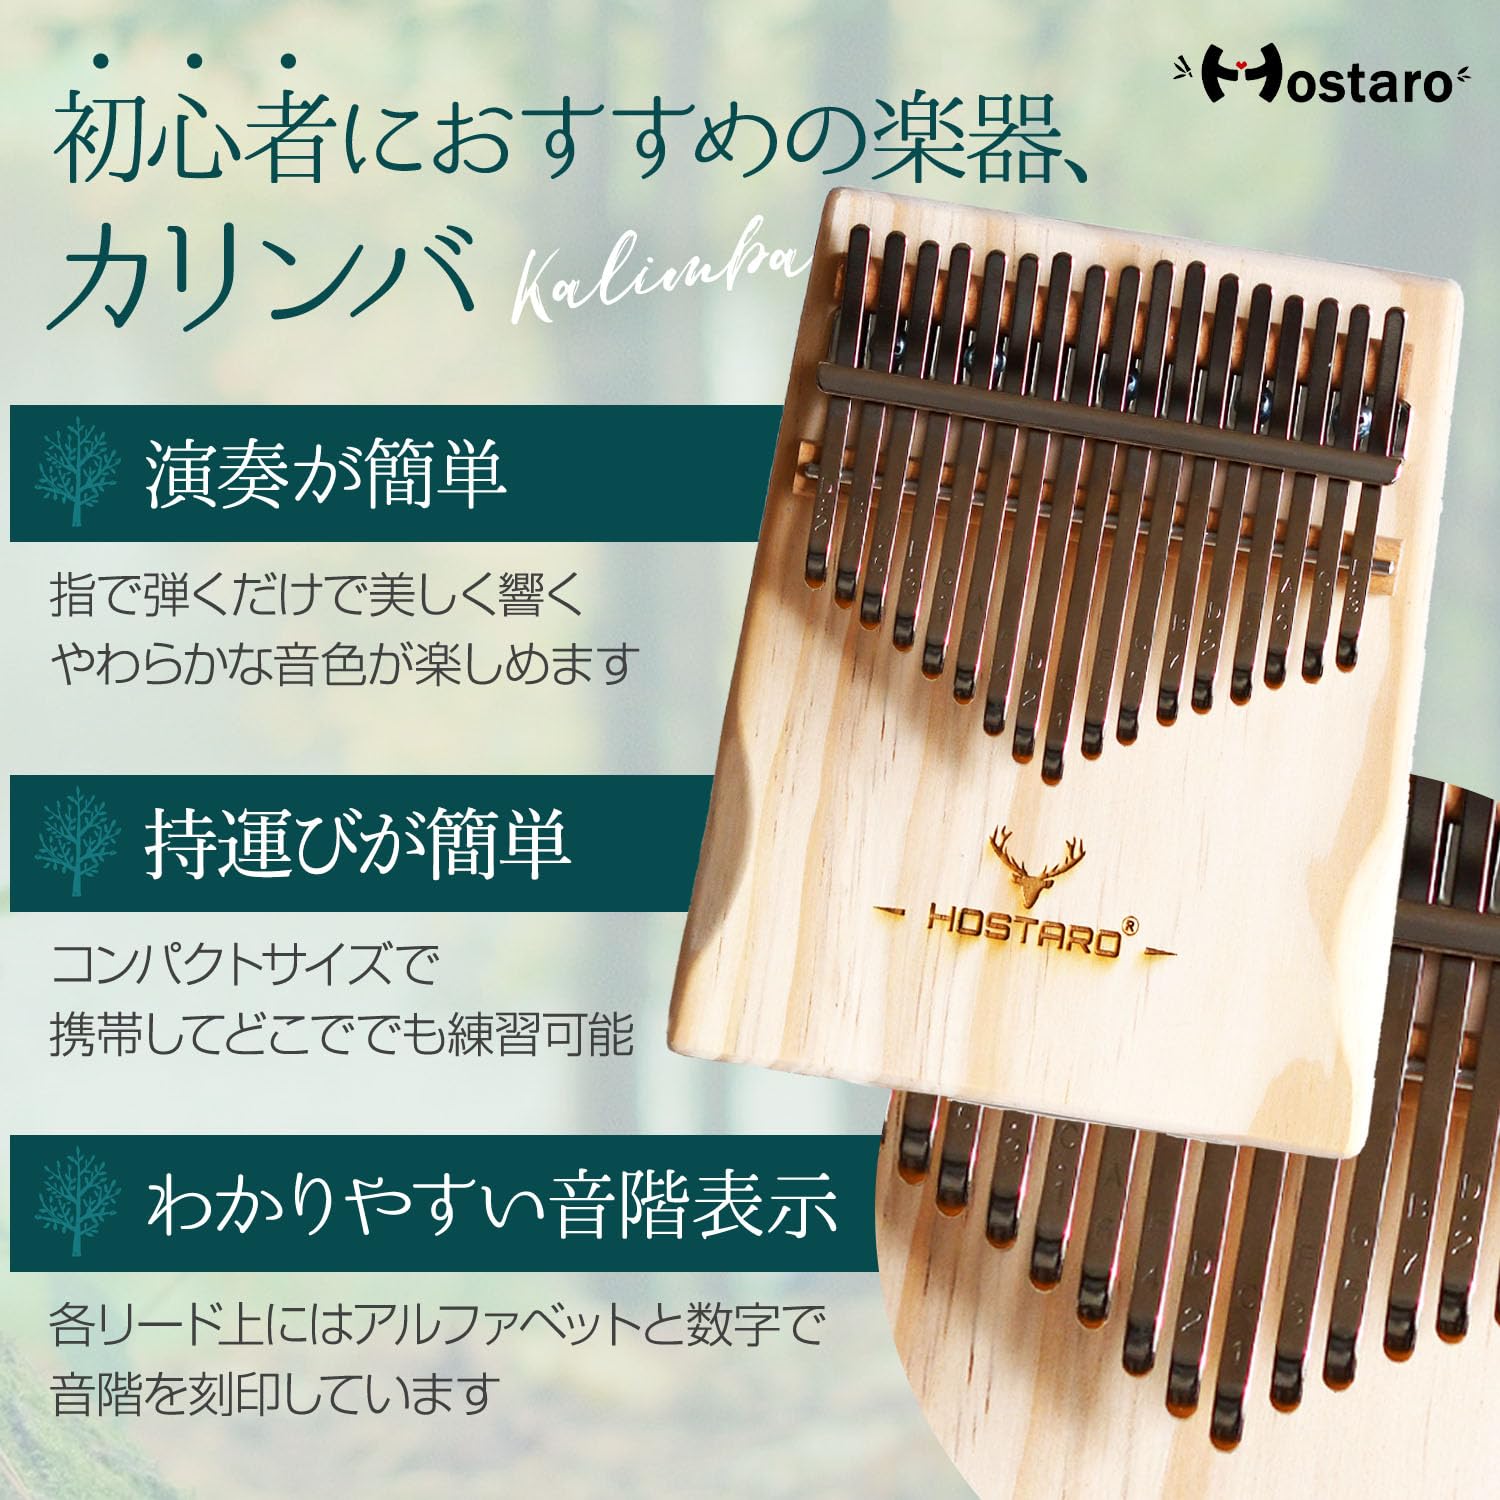 Hostaro カリンバ (親指ピアノ) 17キー ソリッド 初心者セット 松の木 超軽量 (17音 無垢材) 大正琴